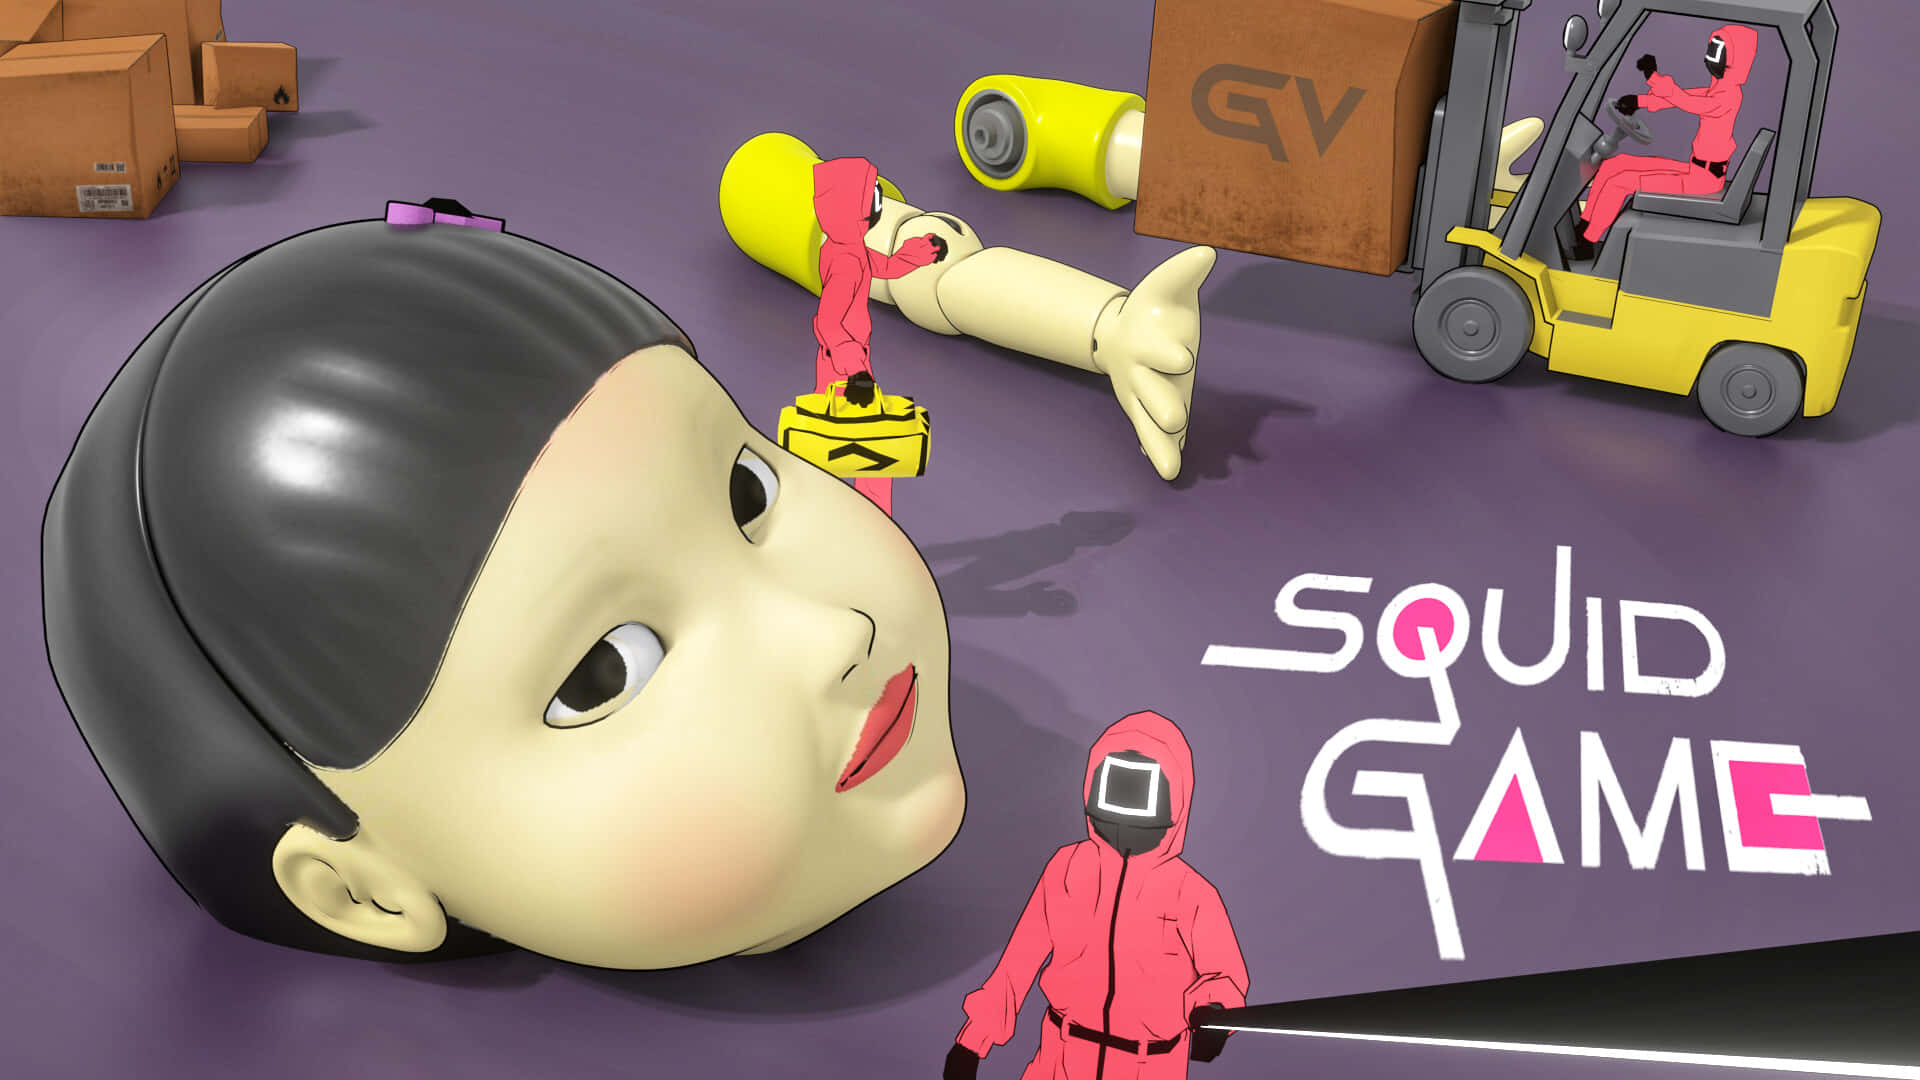 Entfessledein Volles Gaming-potenzial Mit Squid Game!